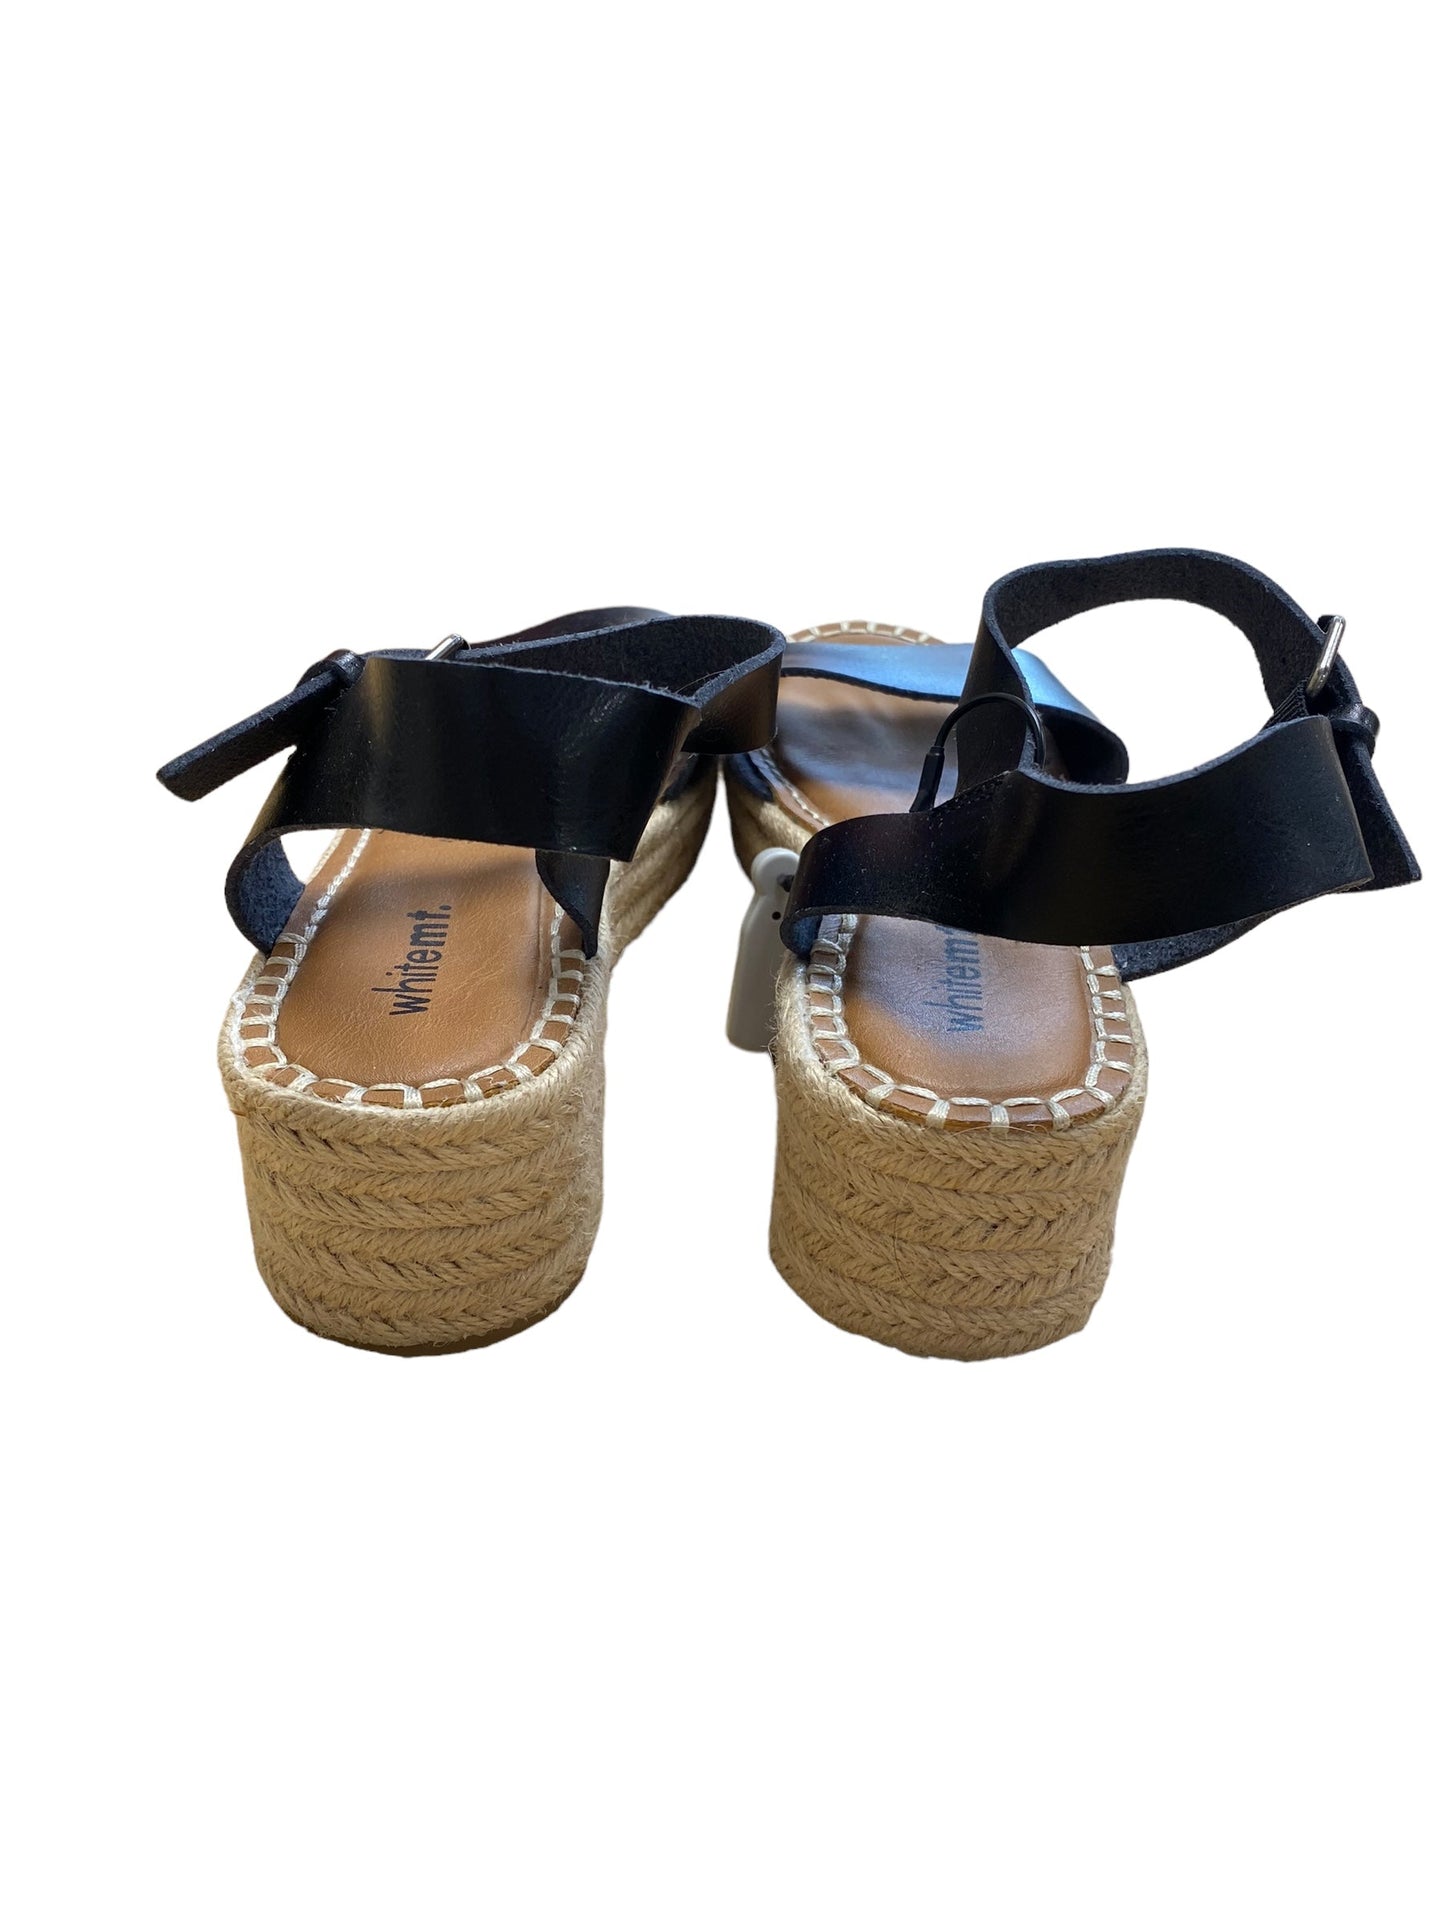 Sandals Heels Platform By White Mountain  Size: 8.5